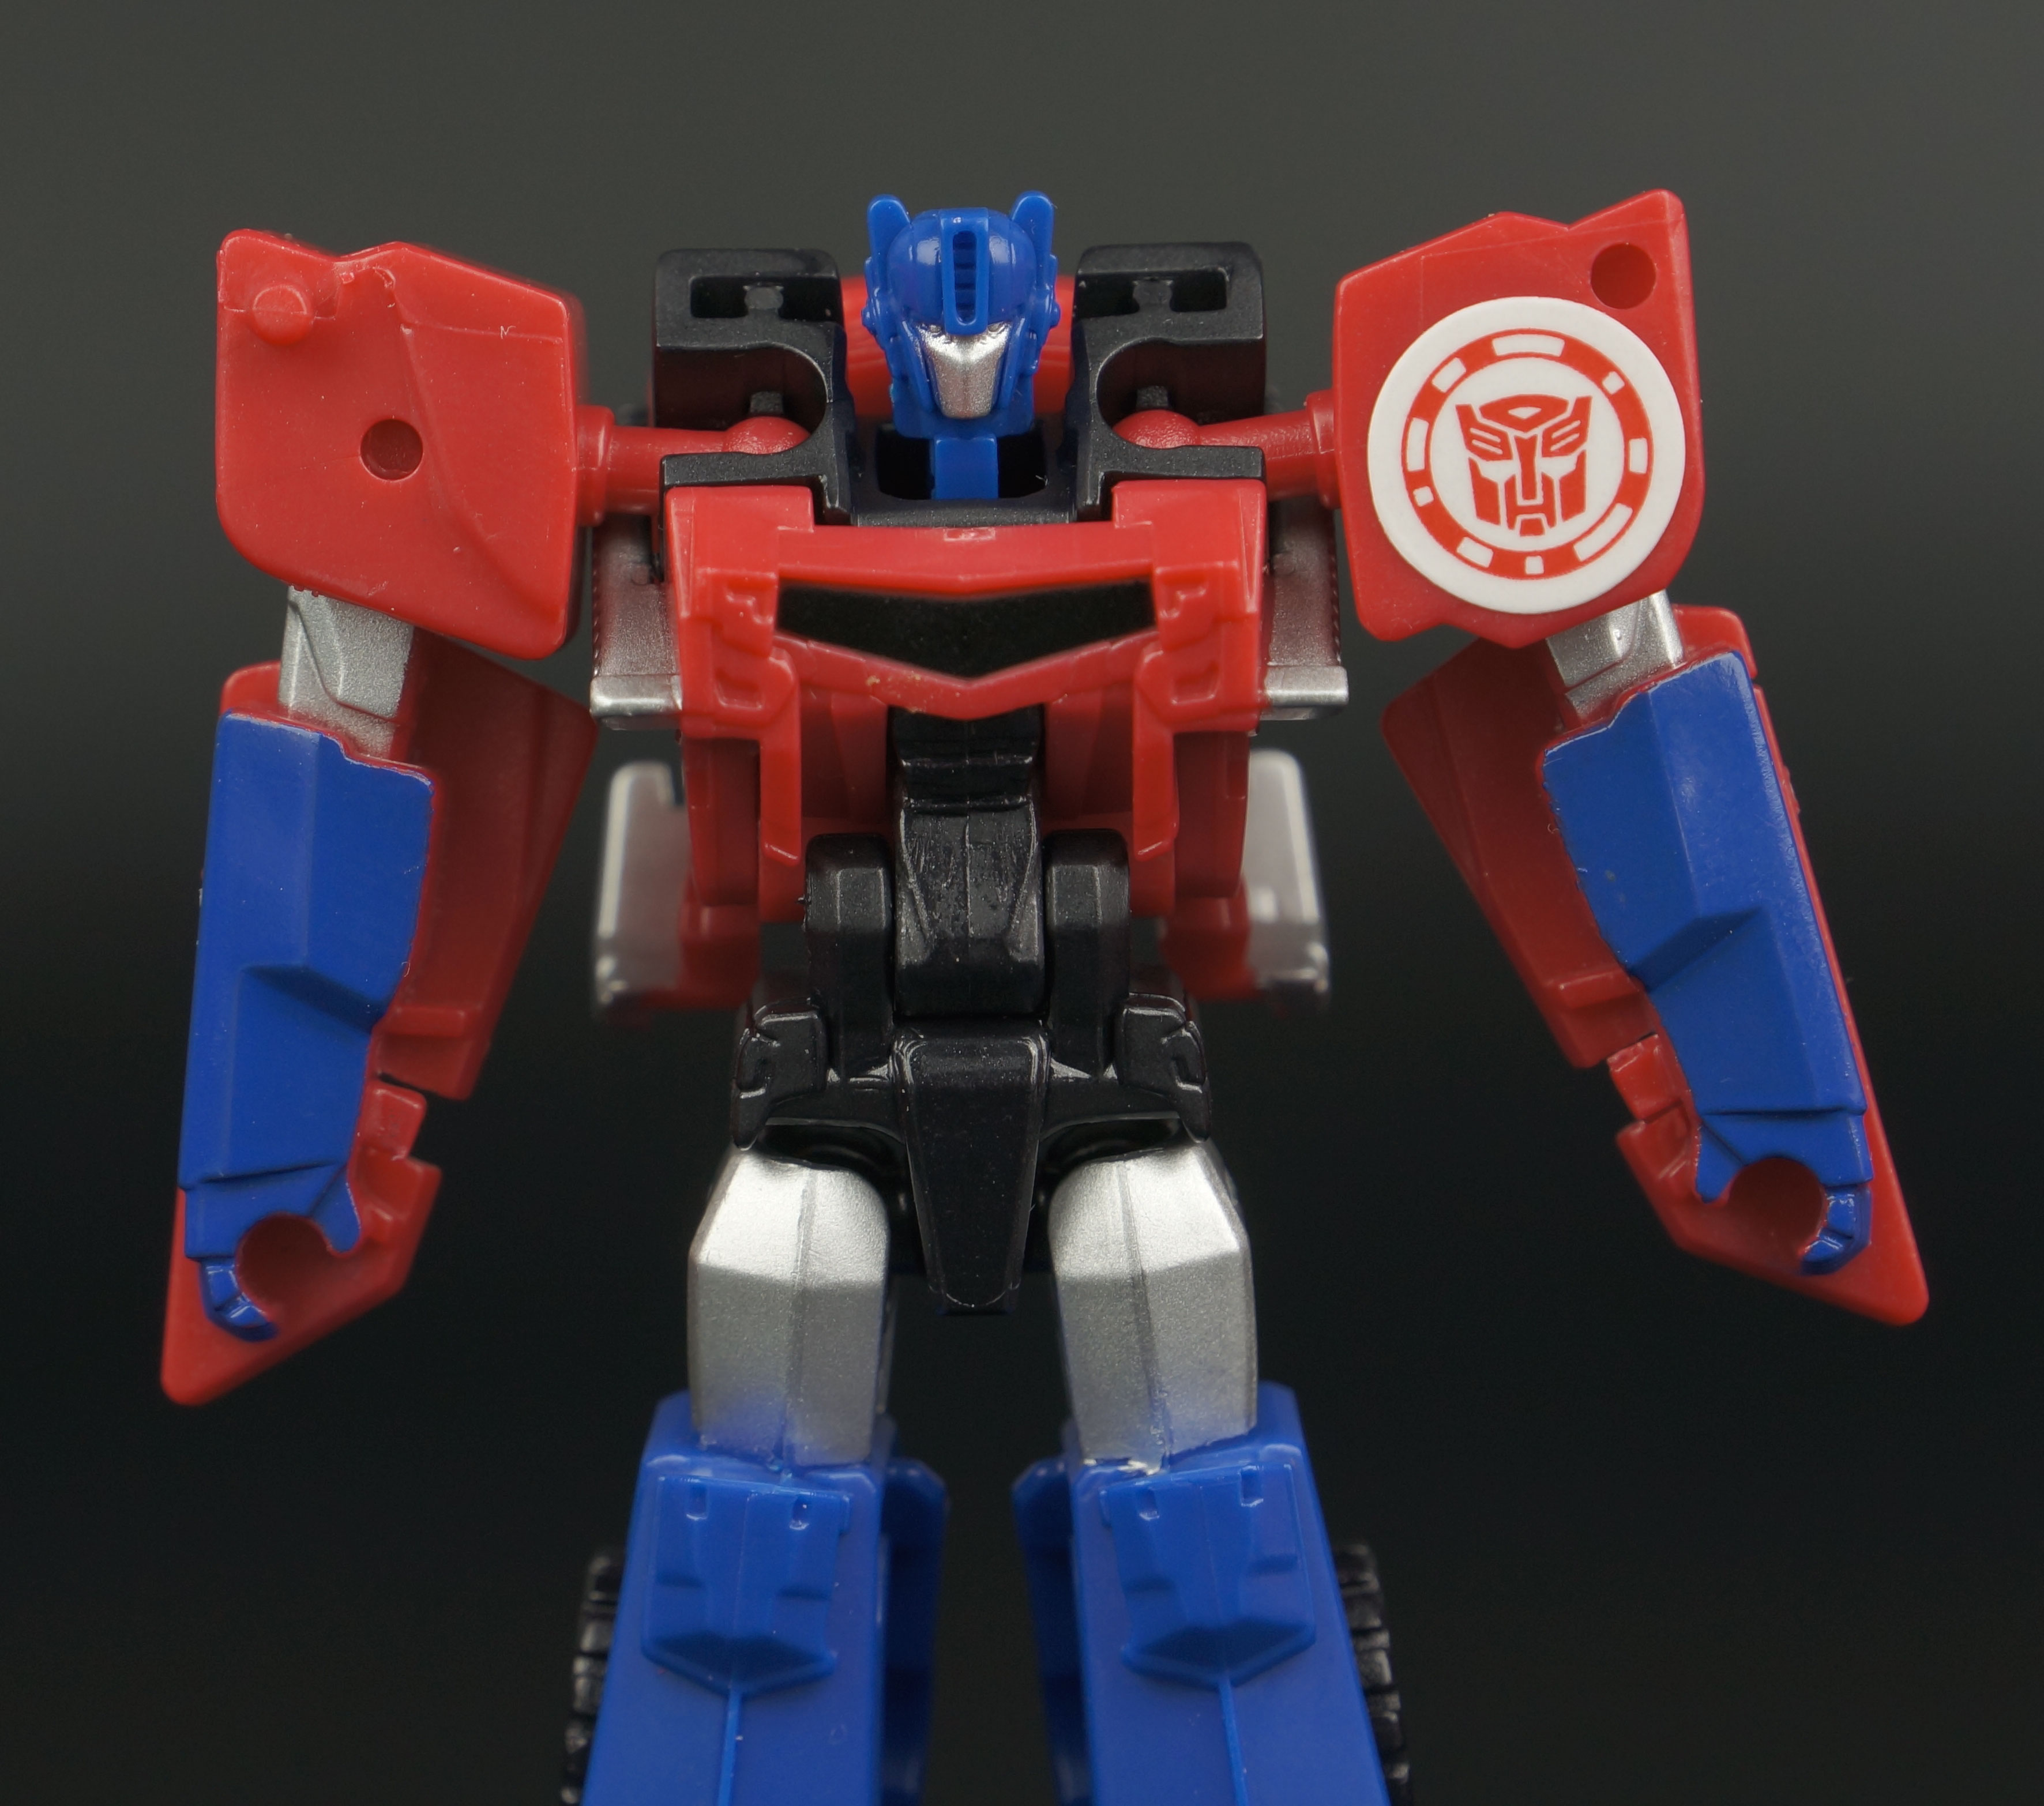 Код transformers. Transformers Robots in Disguise Оптимус. Трансформеры Robots in Disguise Optimus Prime. Transformers Robots in Disguise Оптимус Прайм. Transformers Robots in Disguise игрушки Оптимус Прайм.